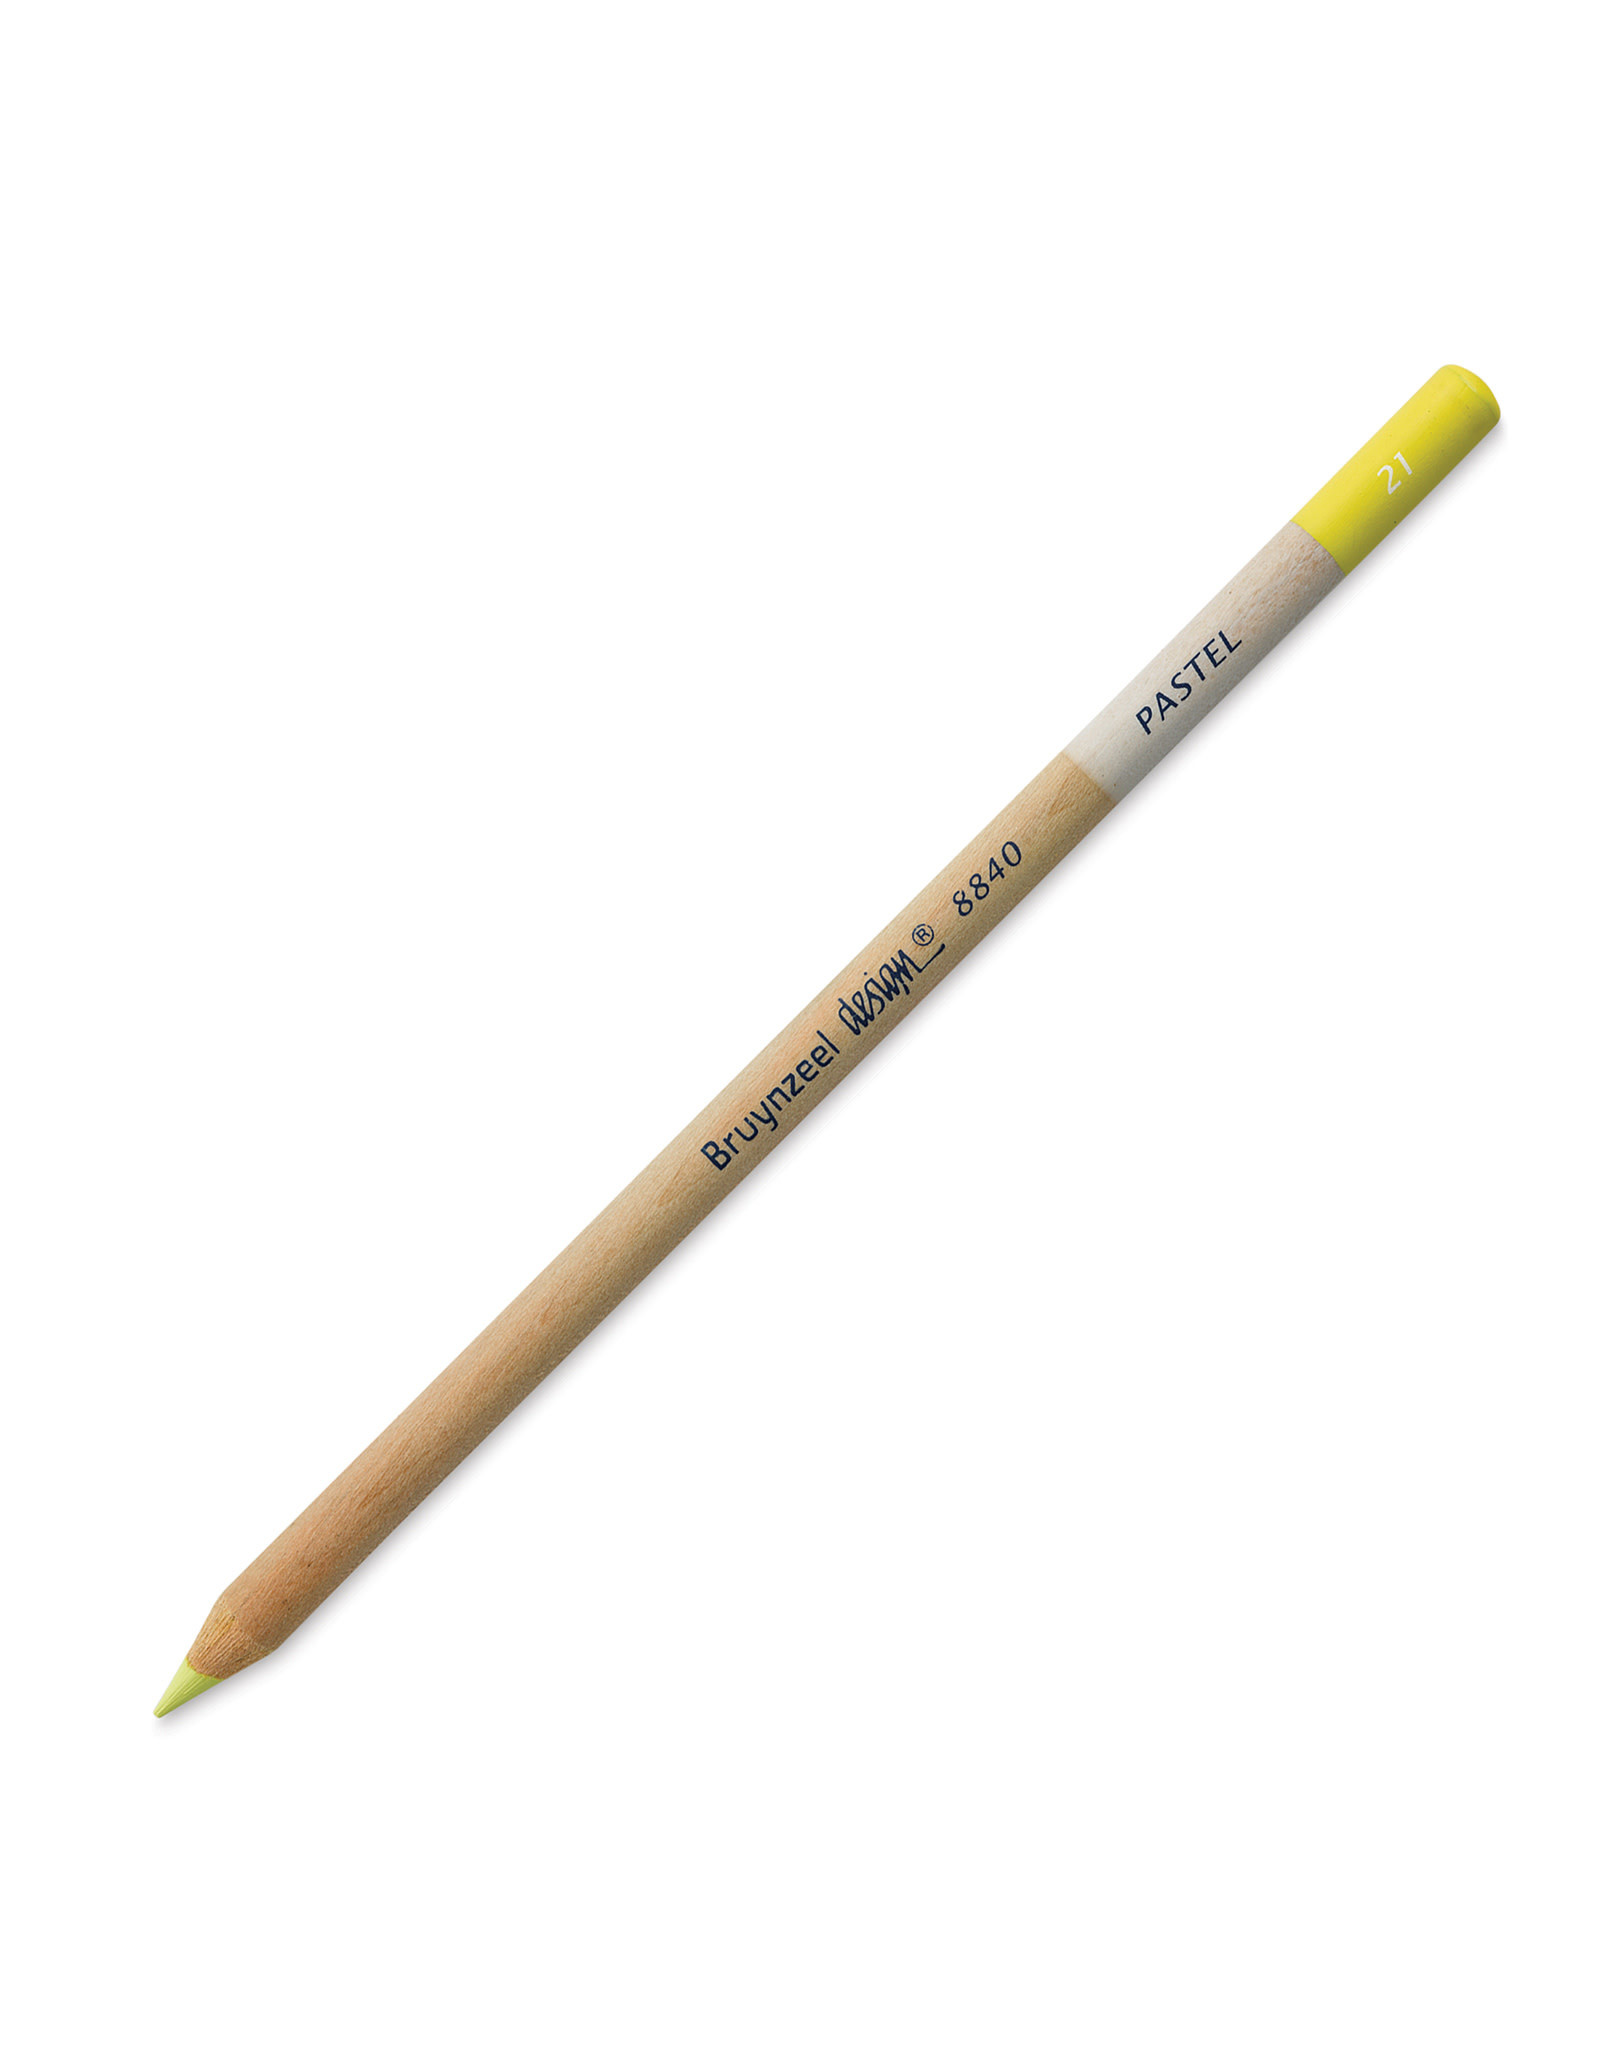 Royal Talens Bruynzeel Design Pastel Pencil, Light Lemon Yellow